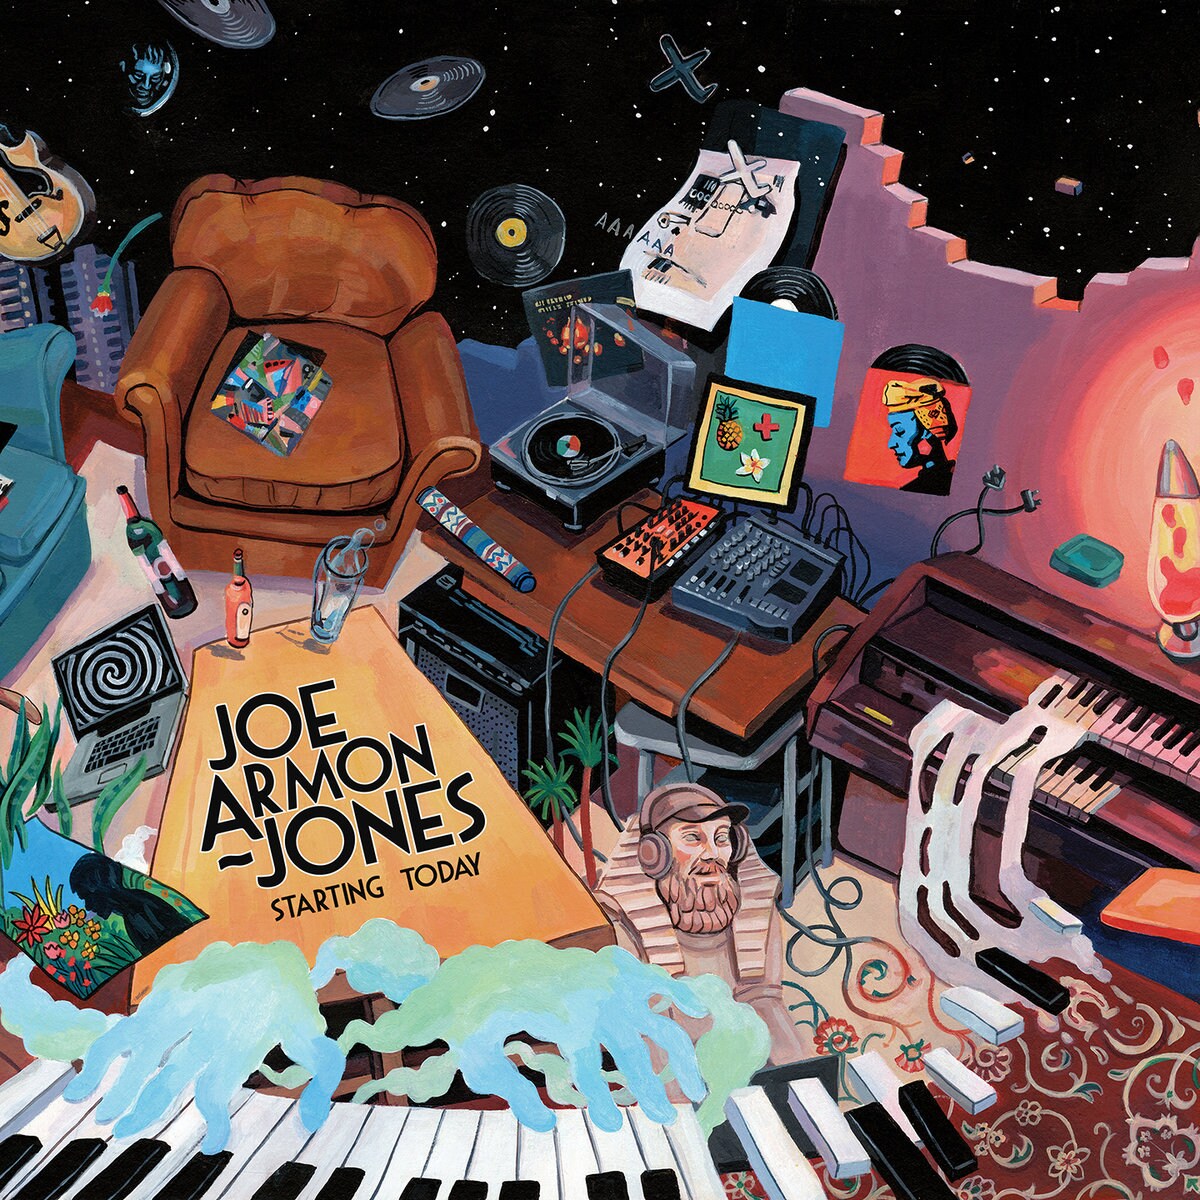 5. Joe Armon-Jones - Starting Today